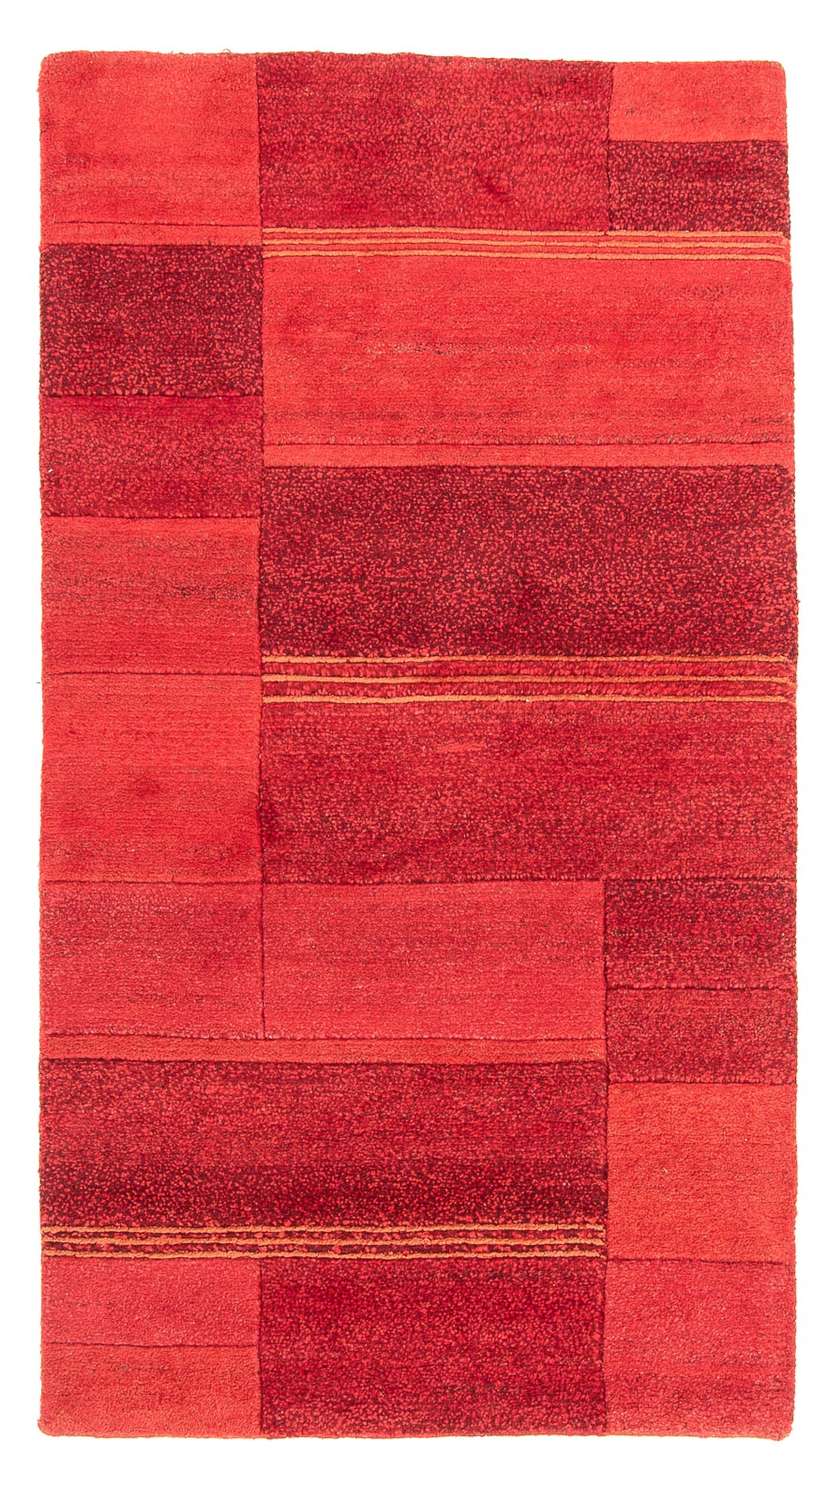 Nepal Rug - 140 x 73 cm - red